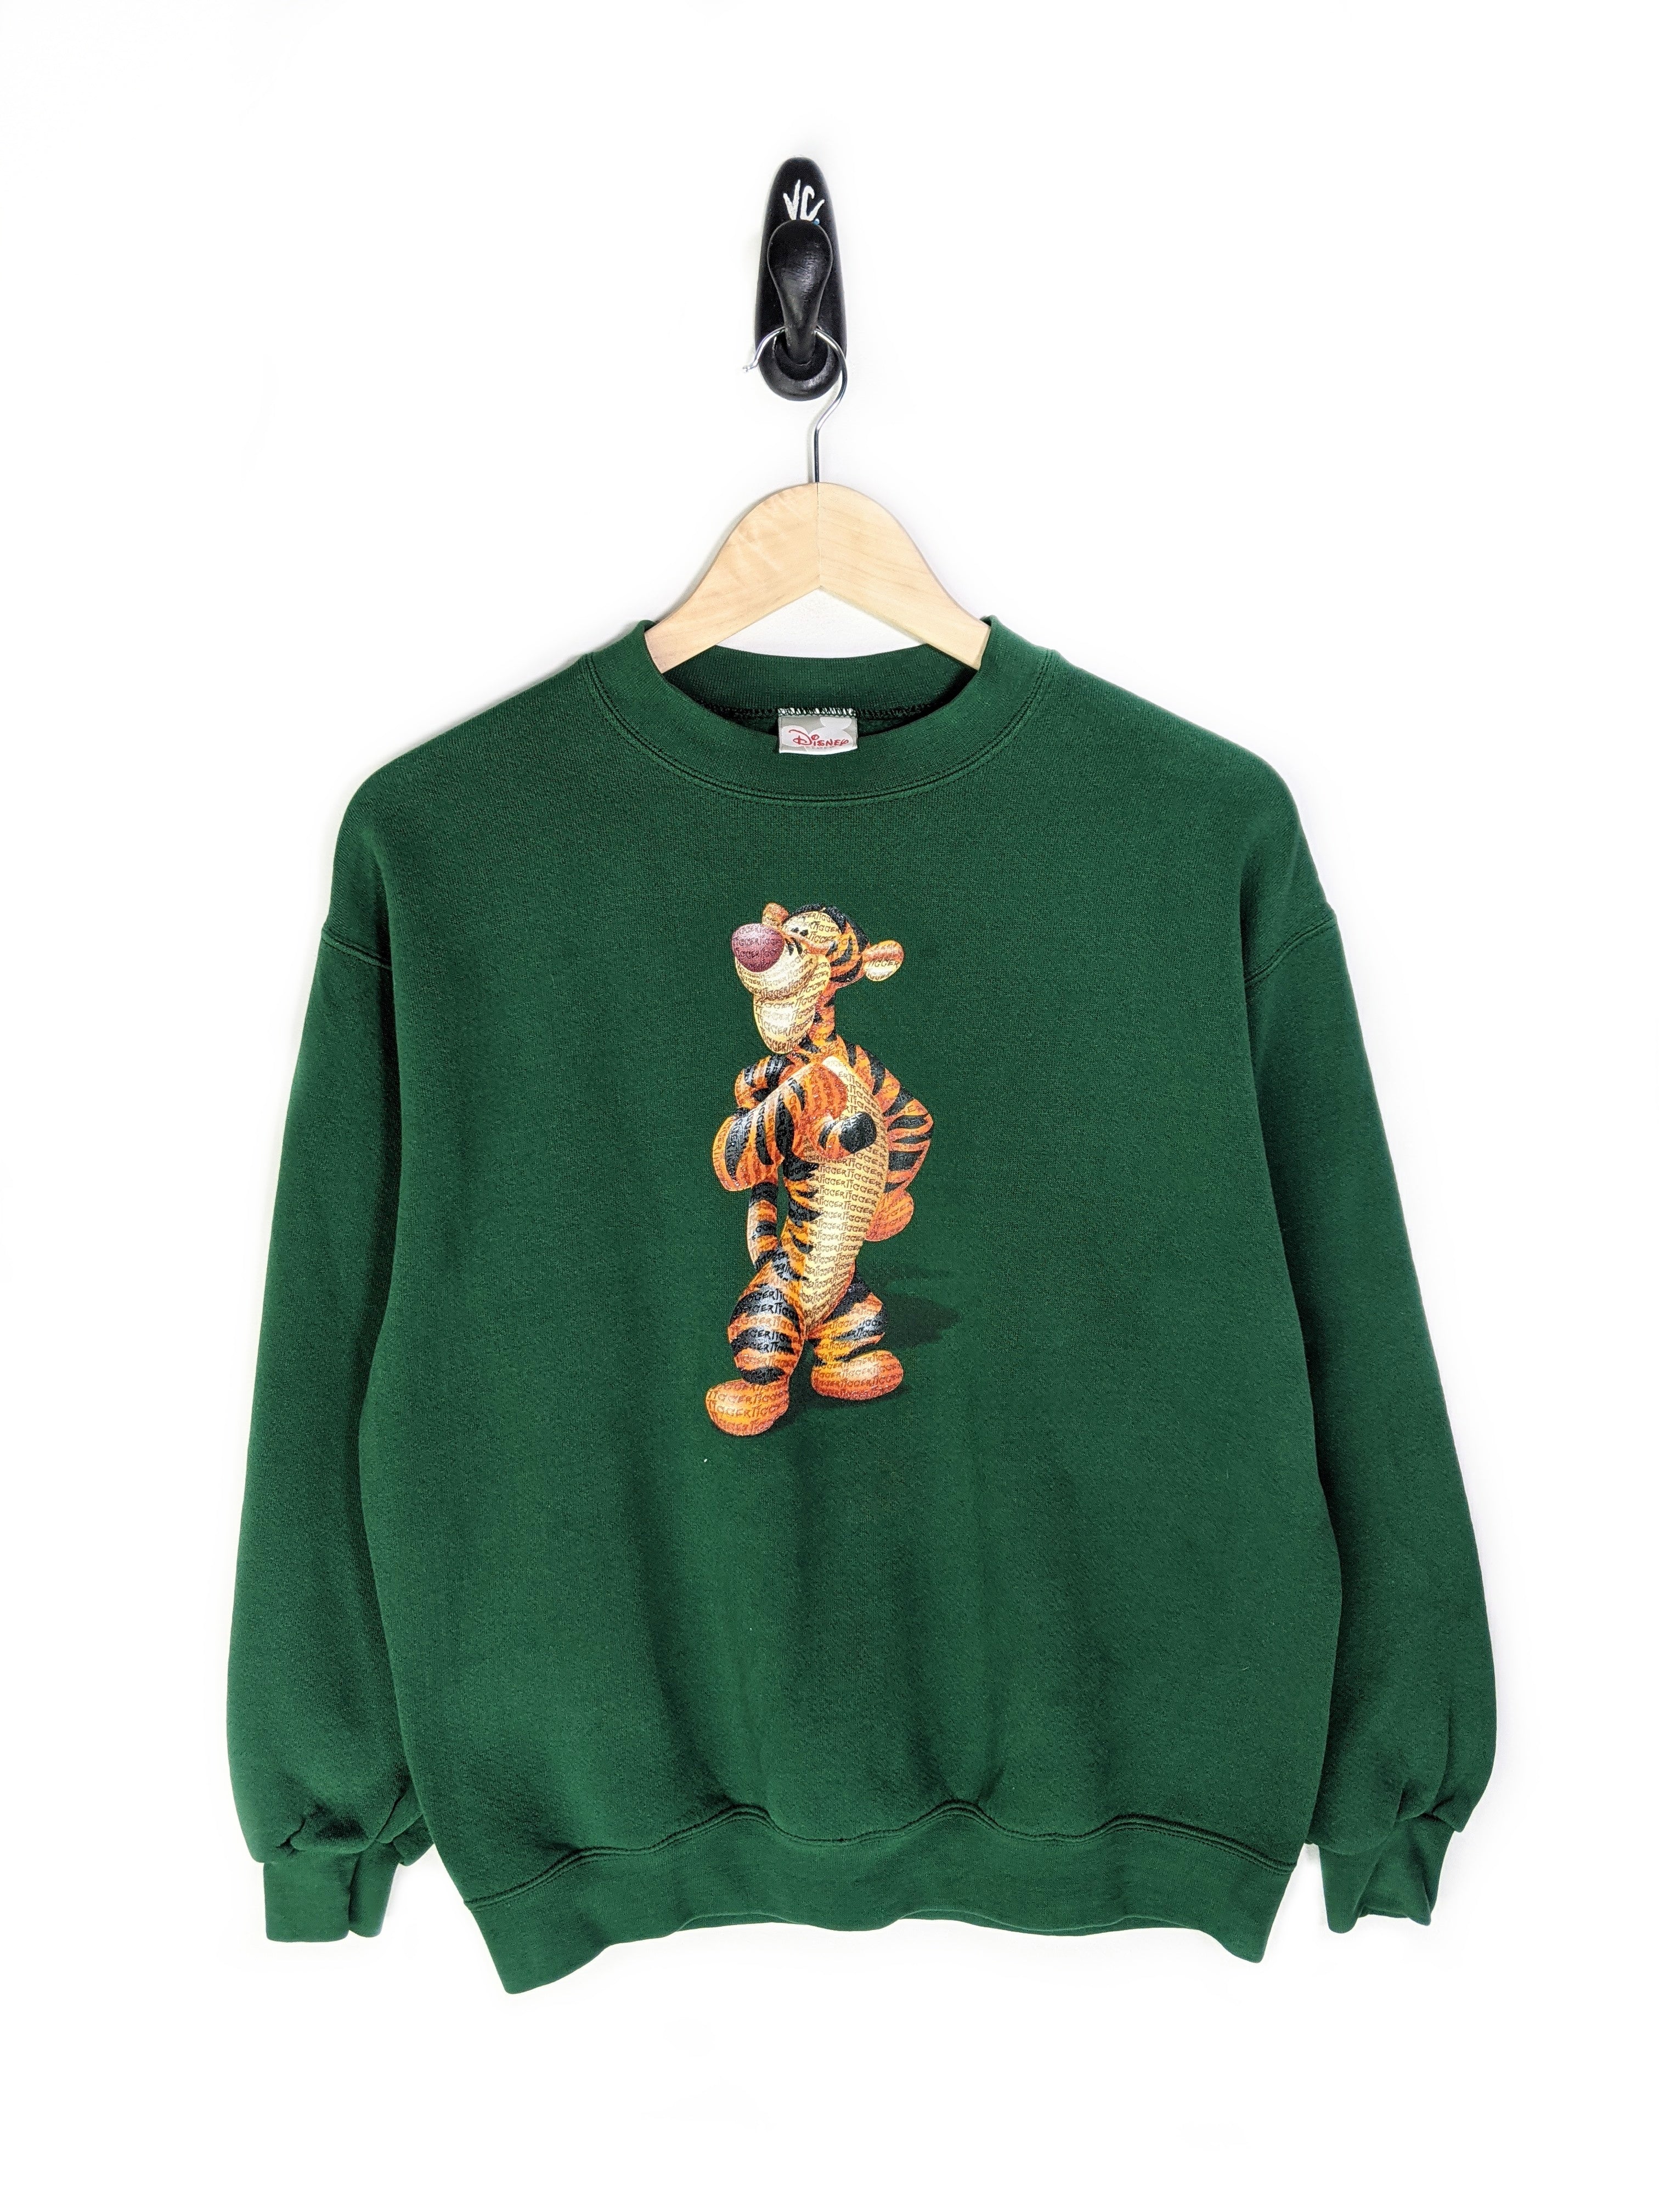 90's Tigger Sweatshirt (M)